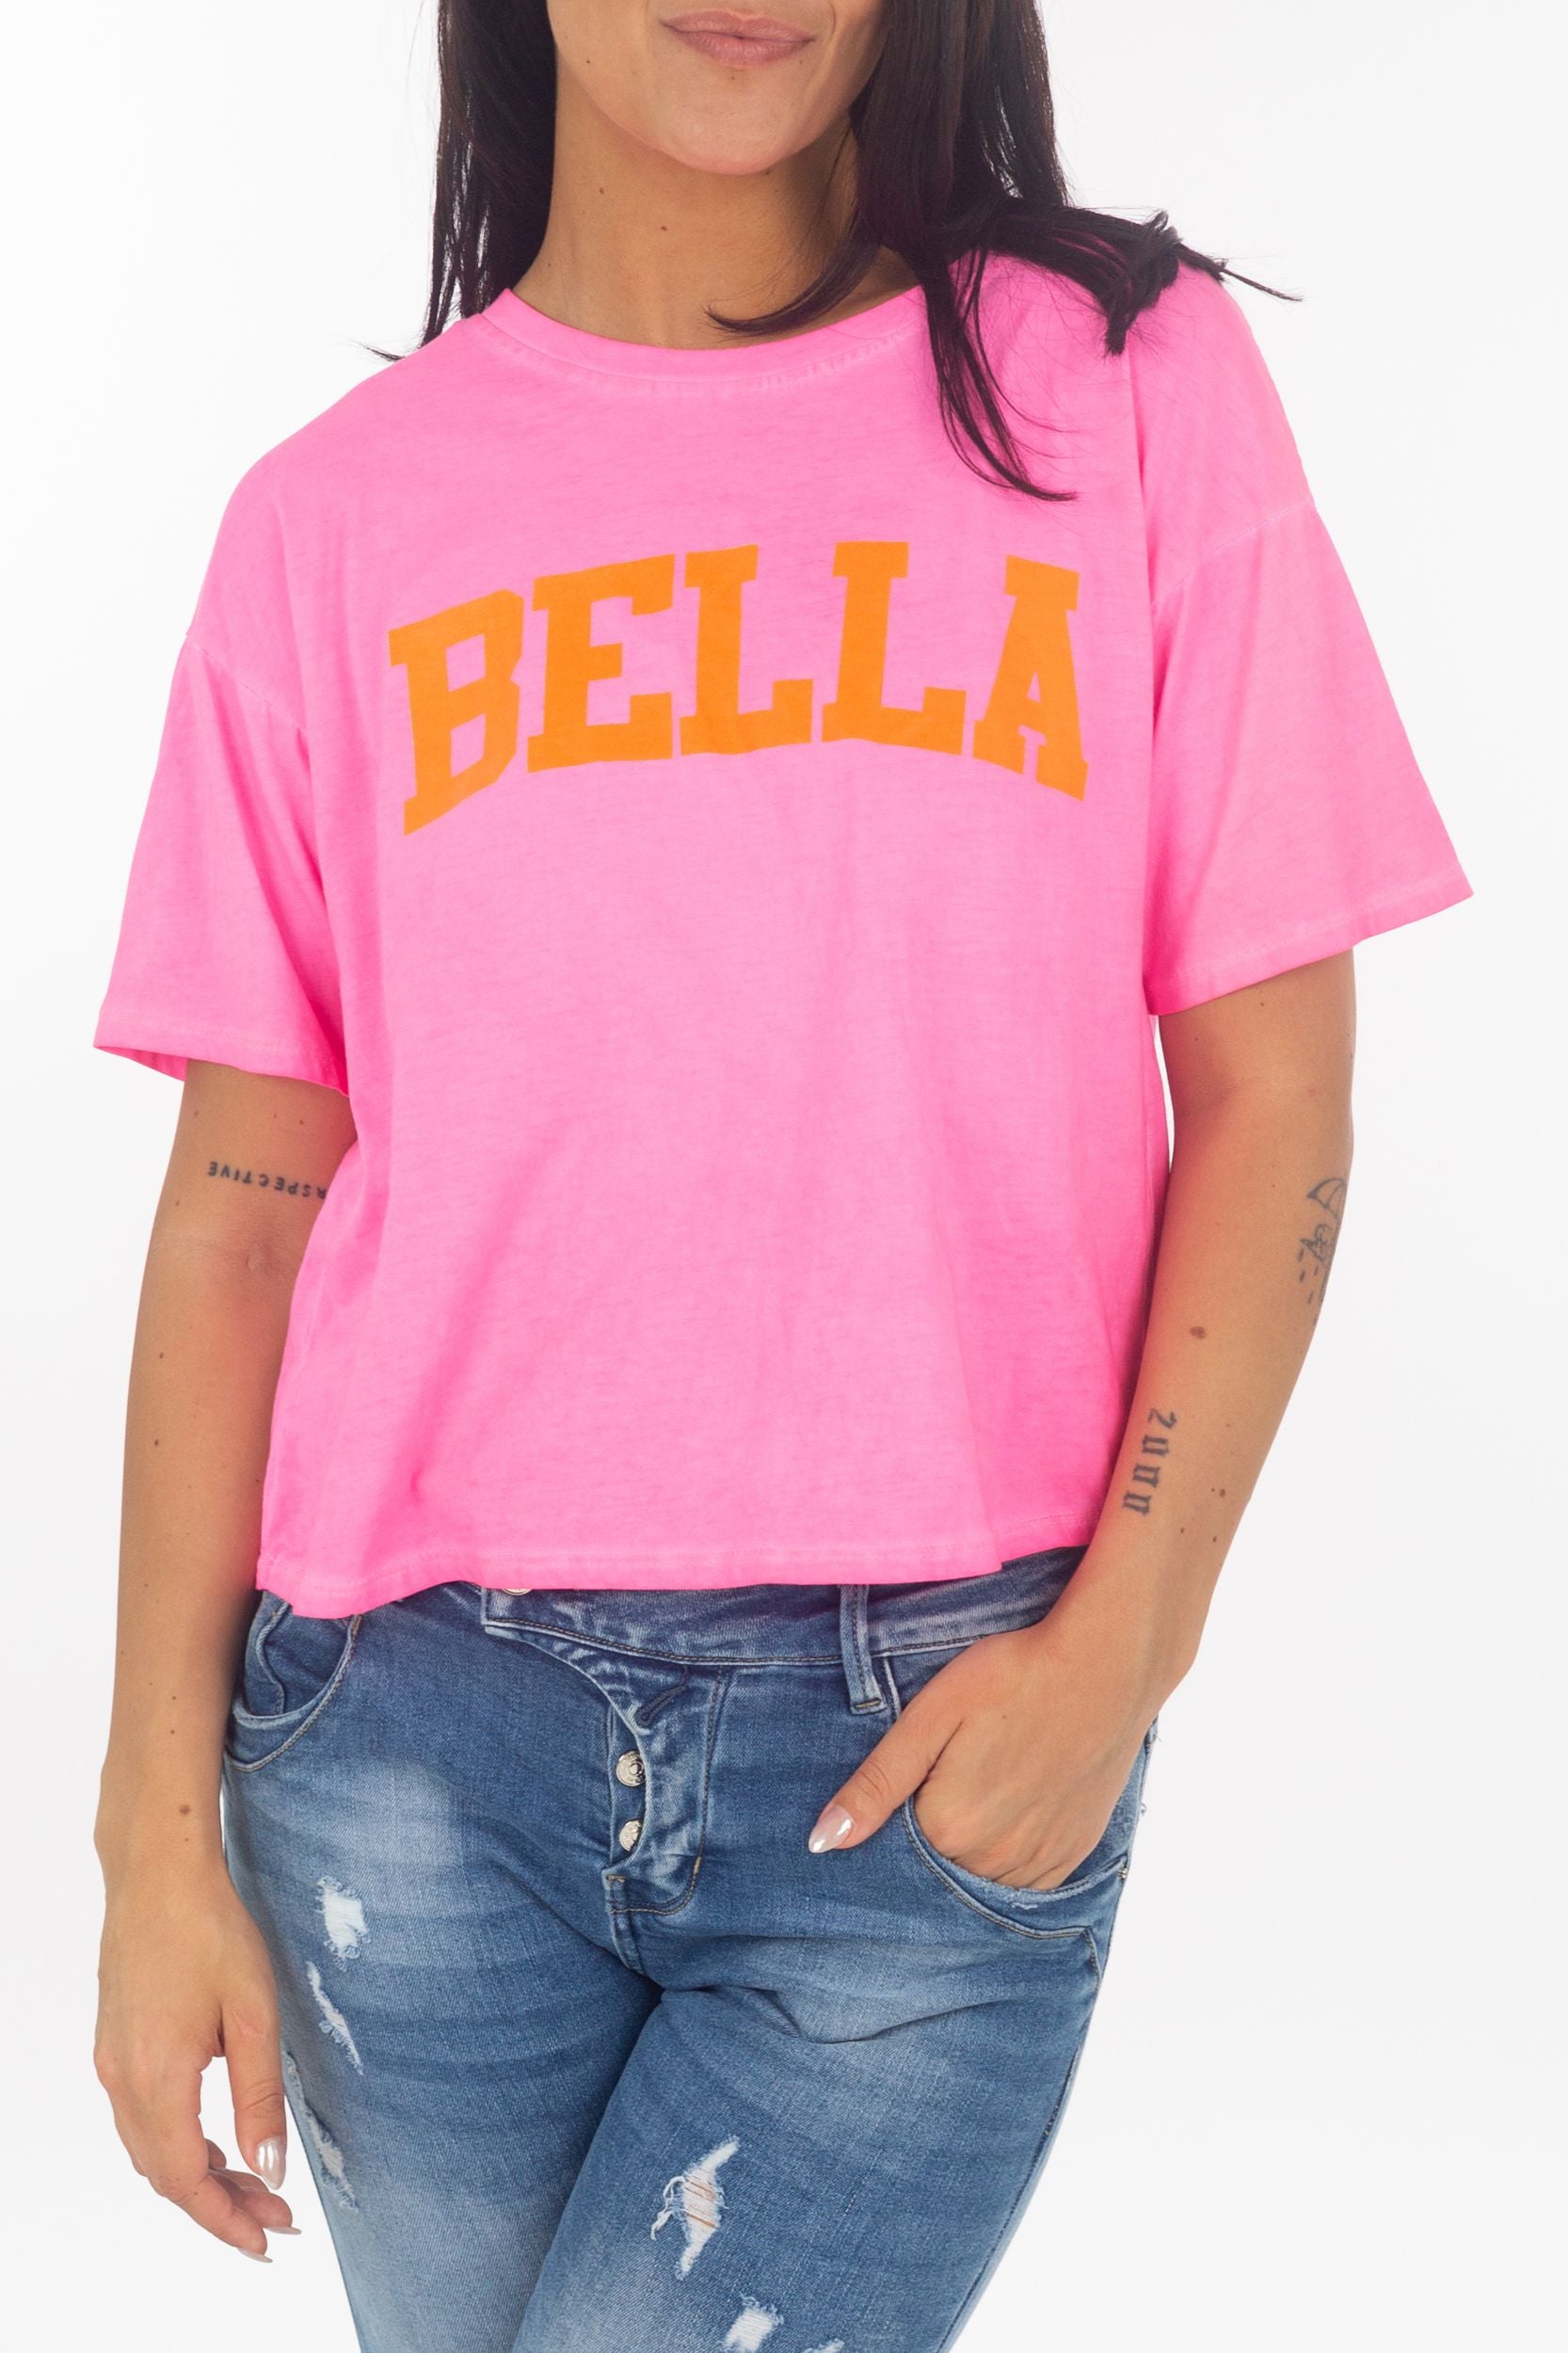 T-Shirts "Bella"